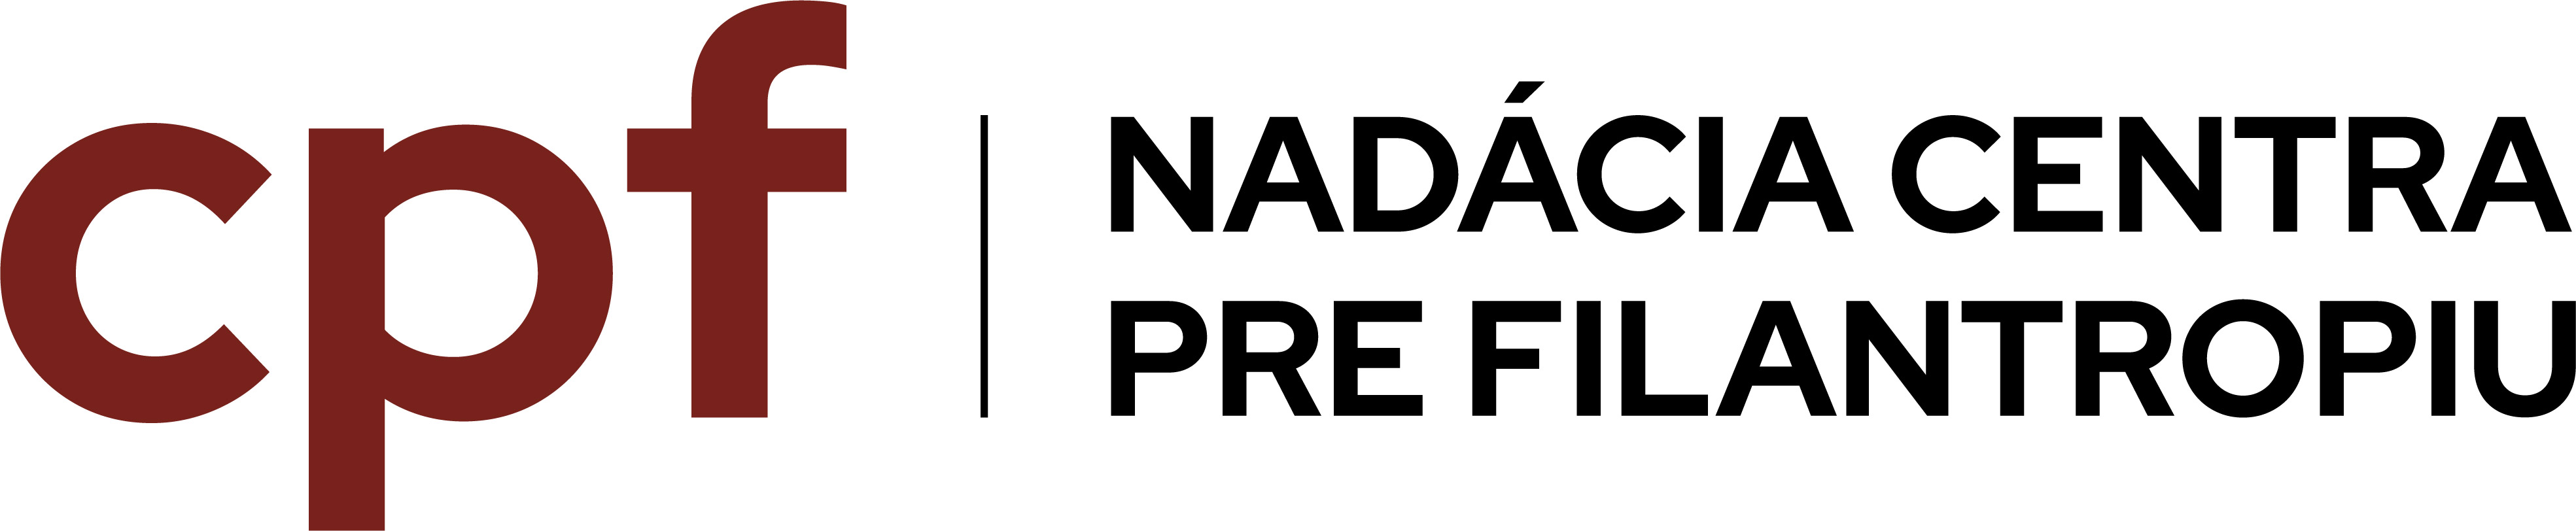 ncpf logo primary